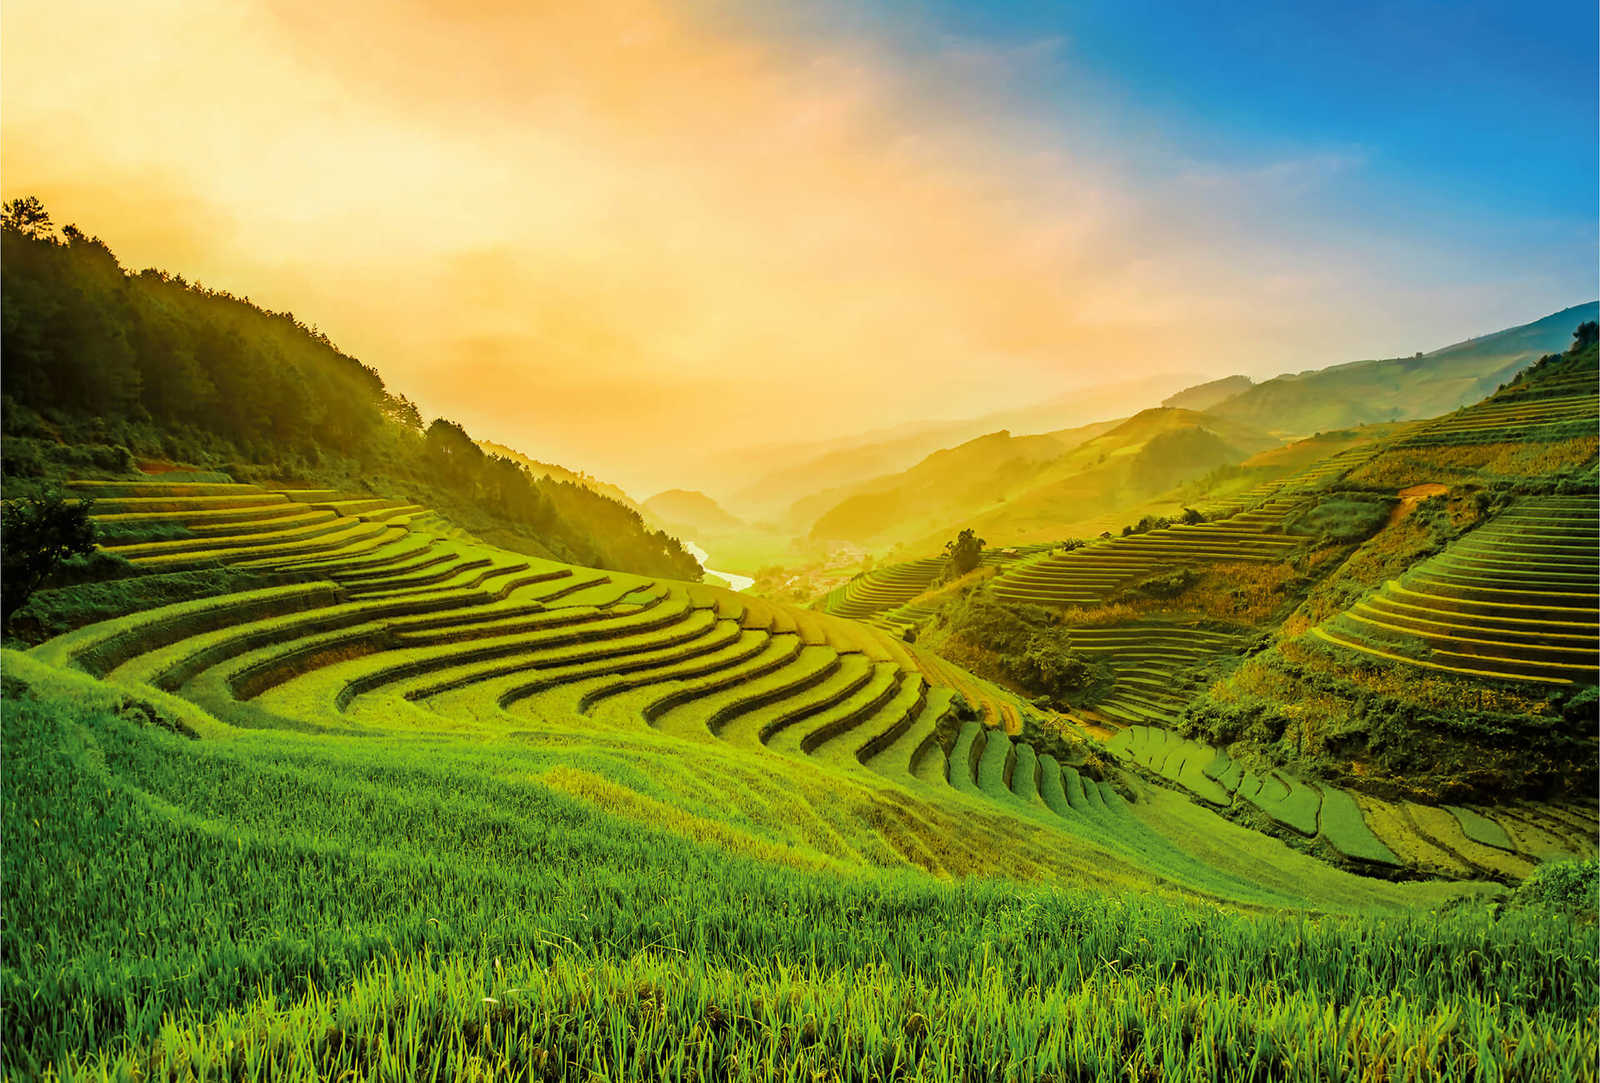         Vietnam rice fields at sunrise mural
    